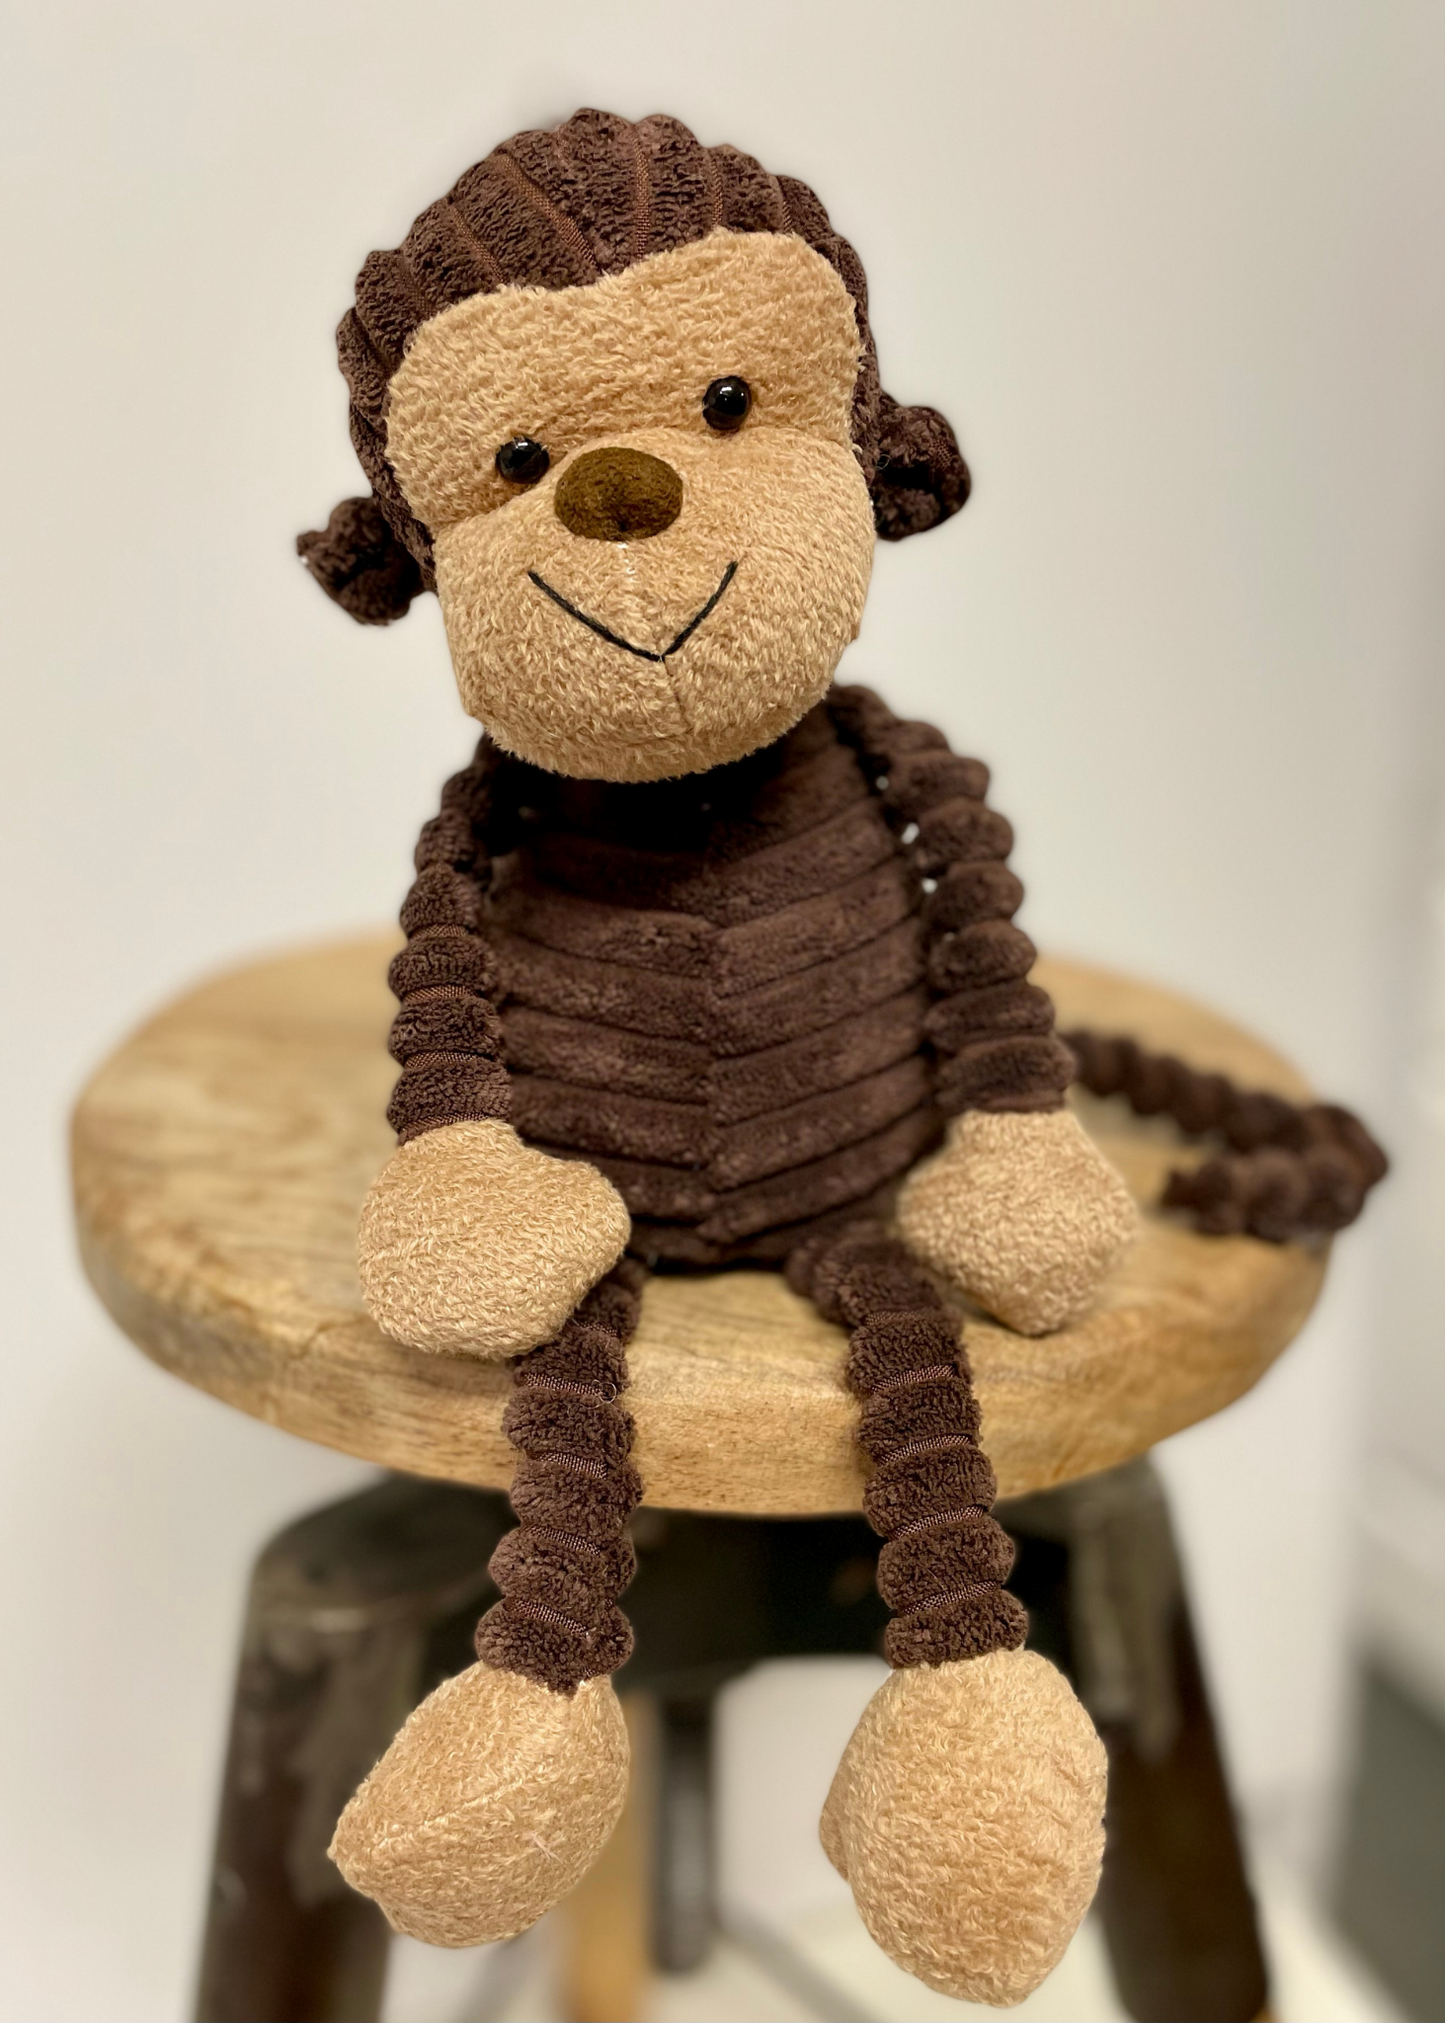 Toy - Michael the Monkey